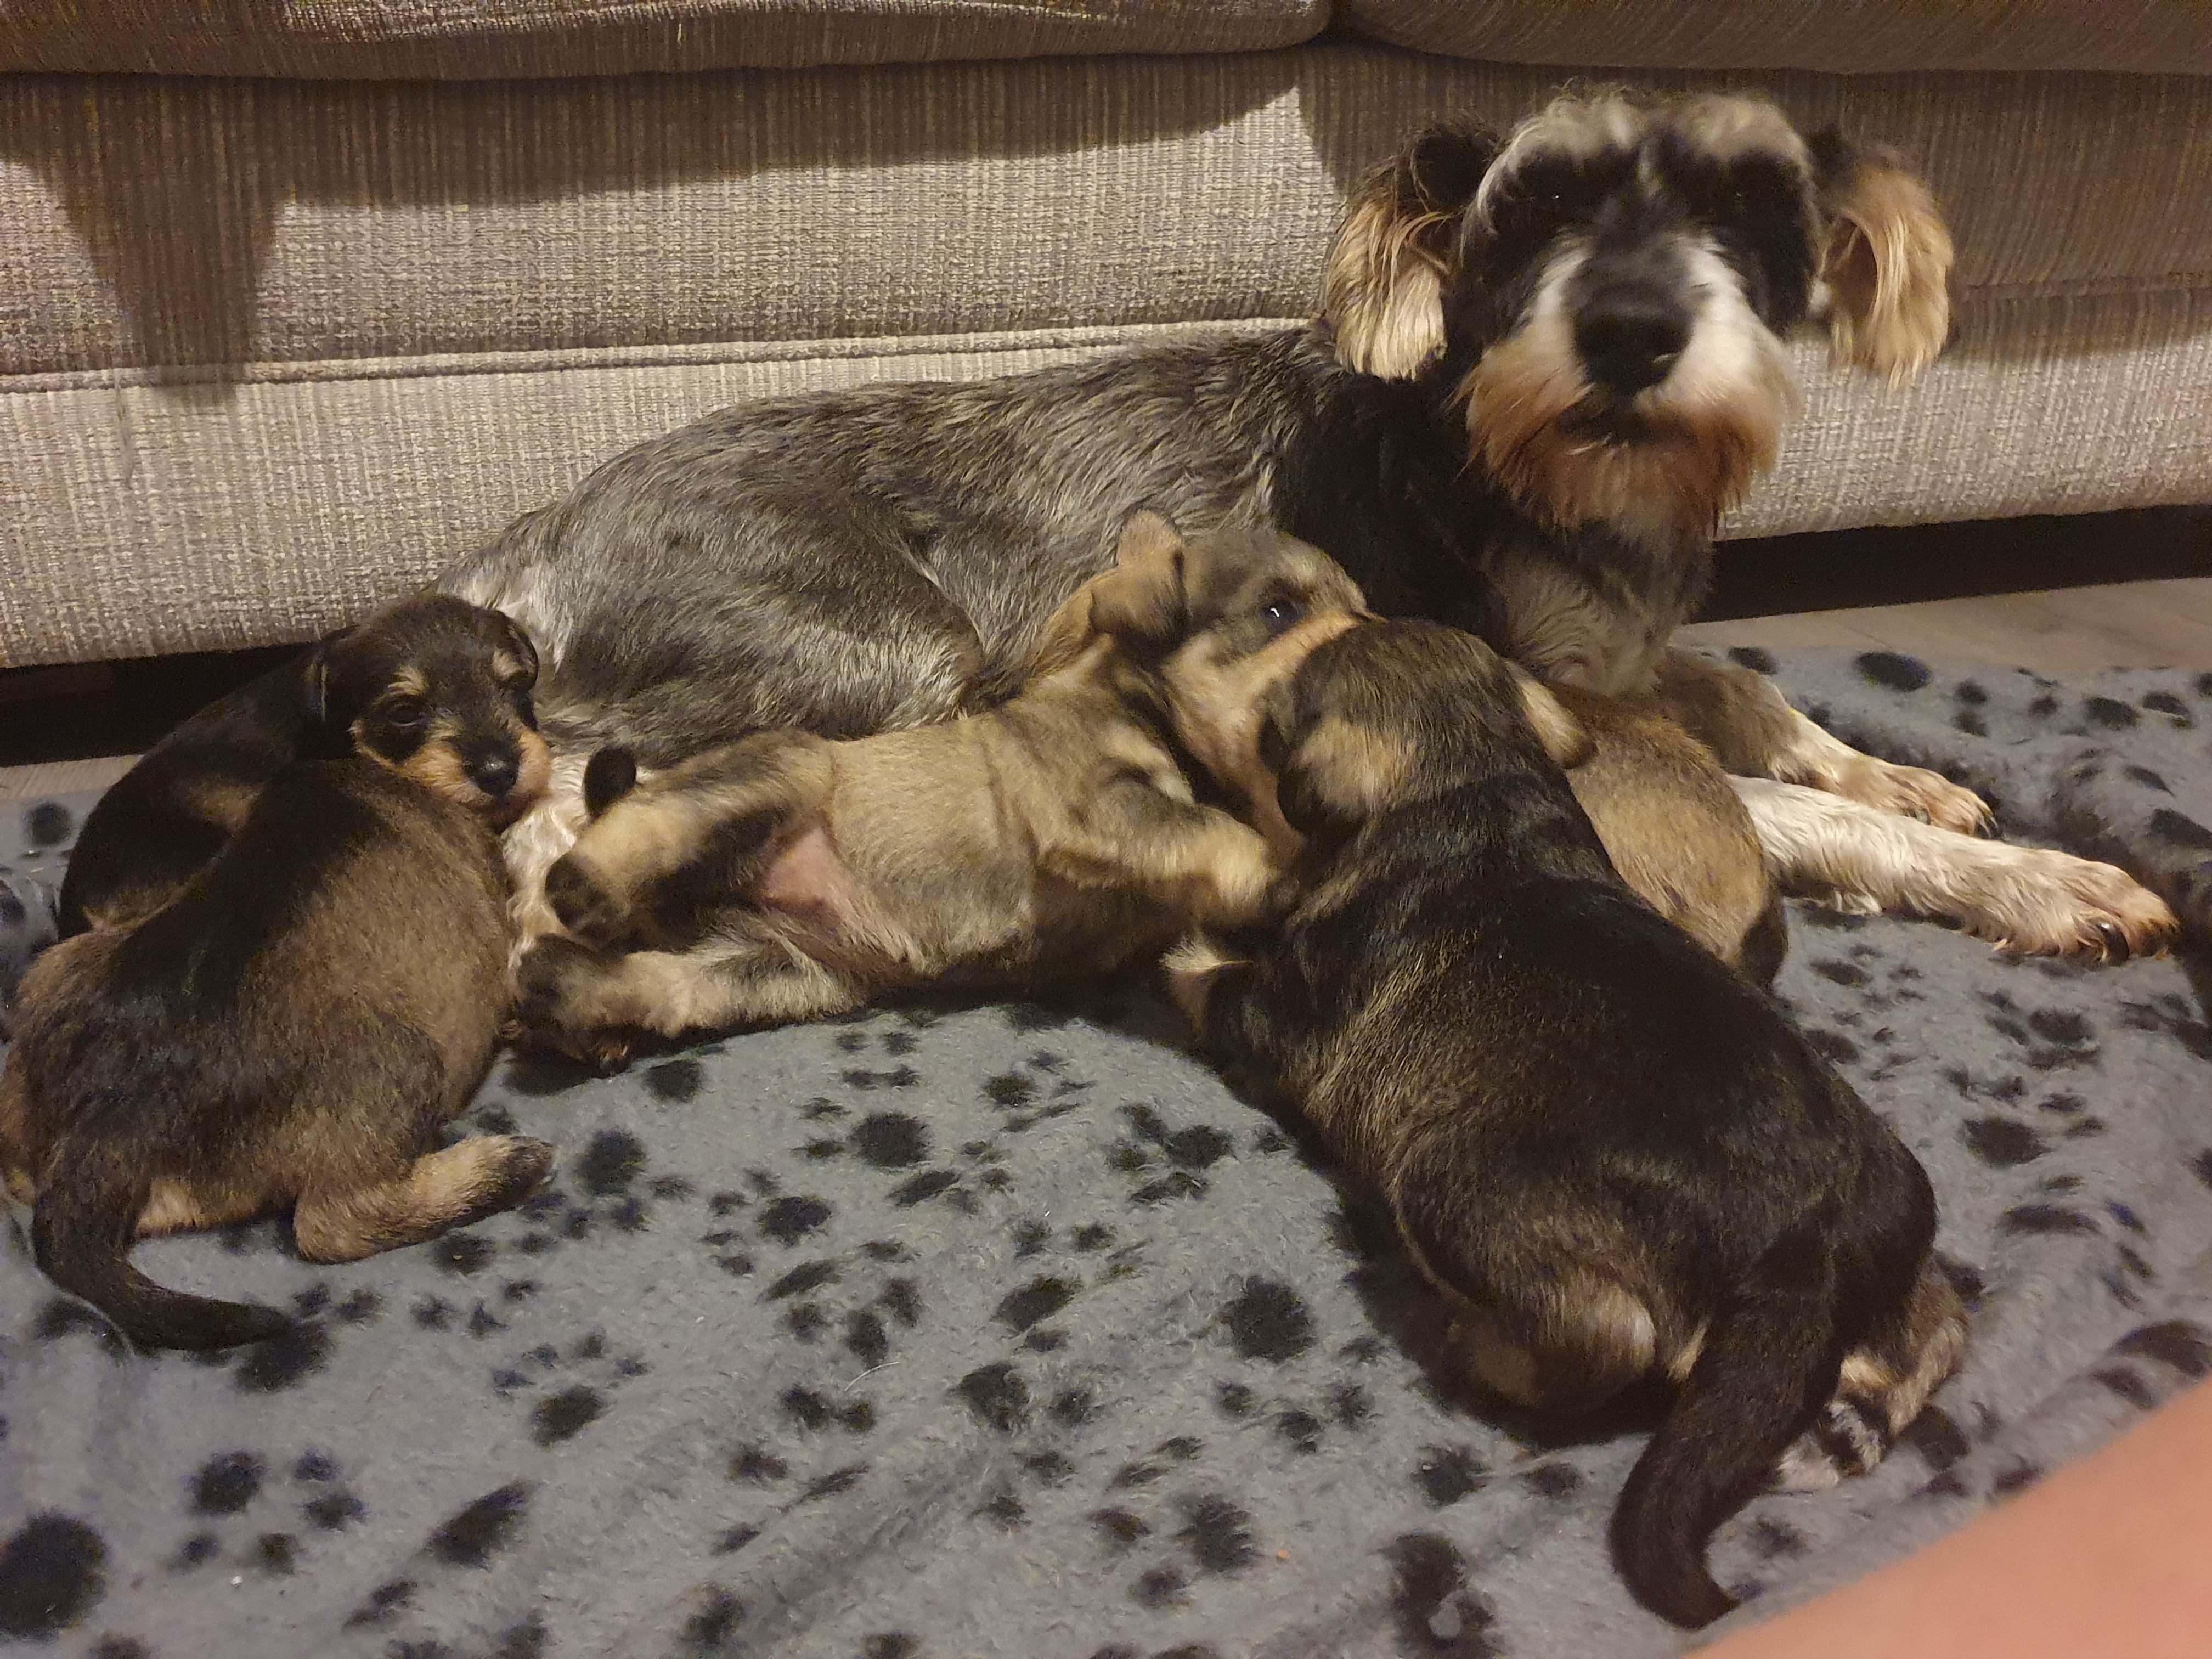 Mum and puppies 🐶 